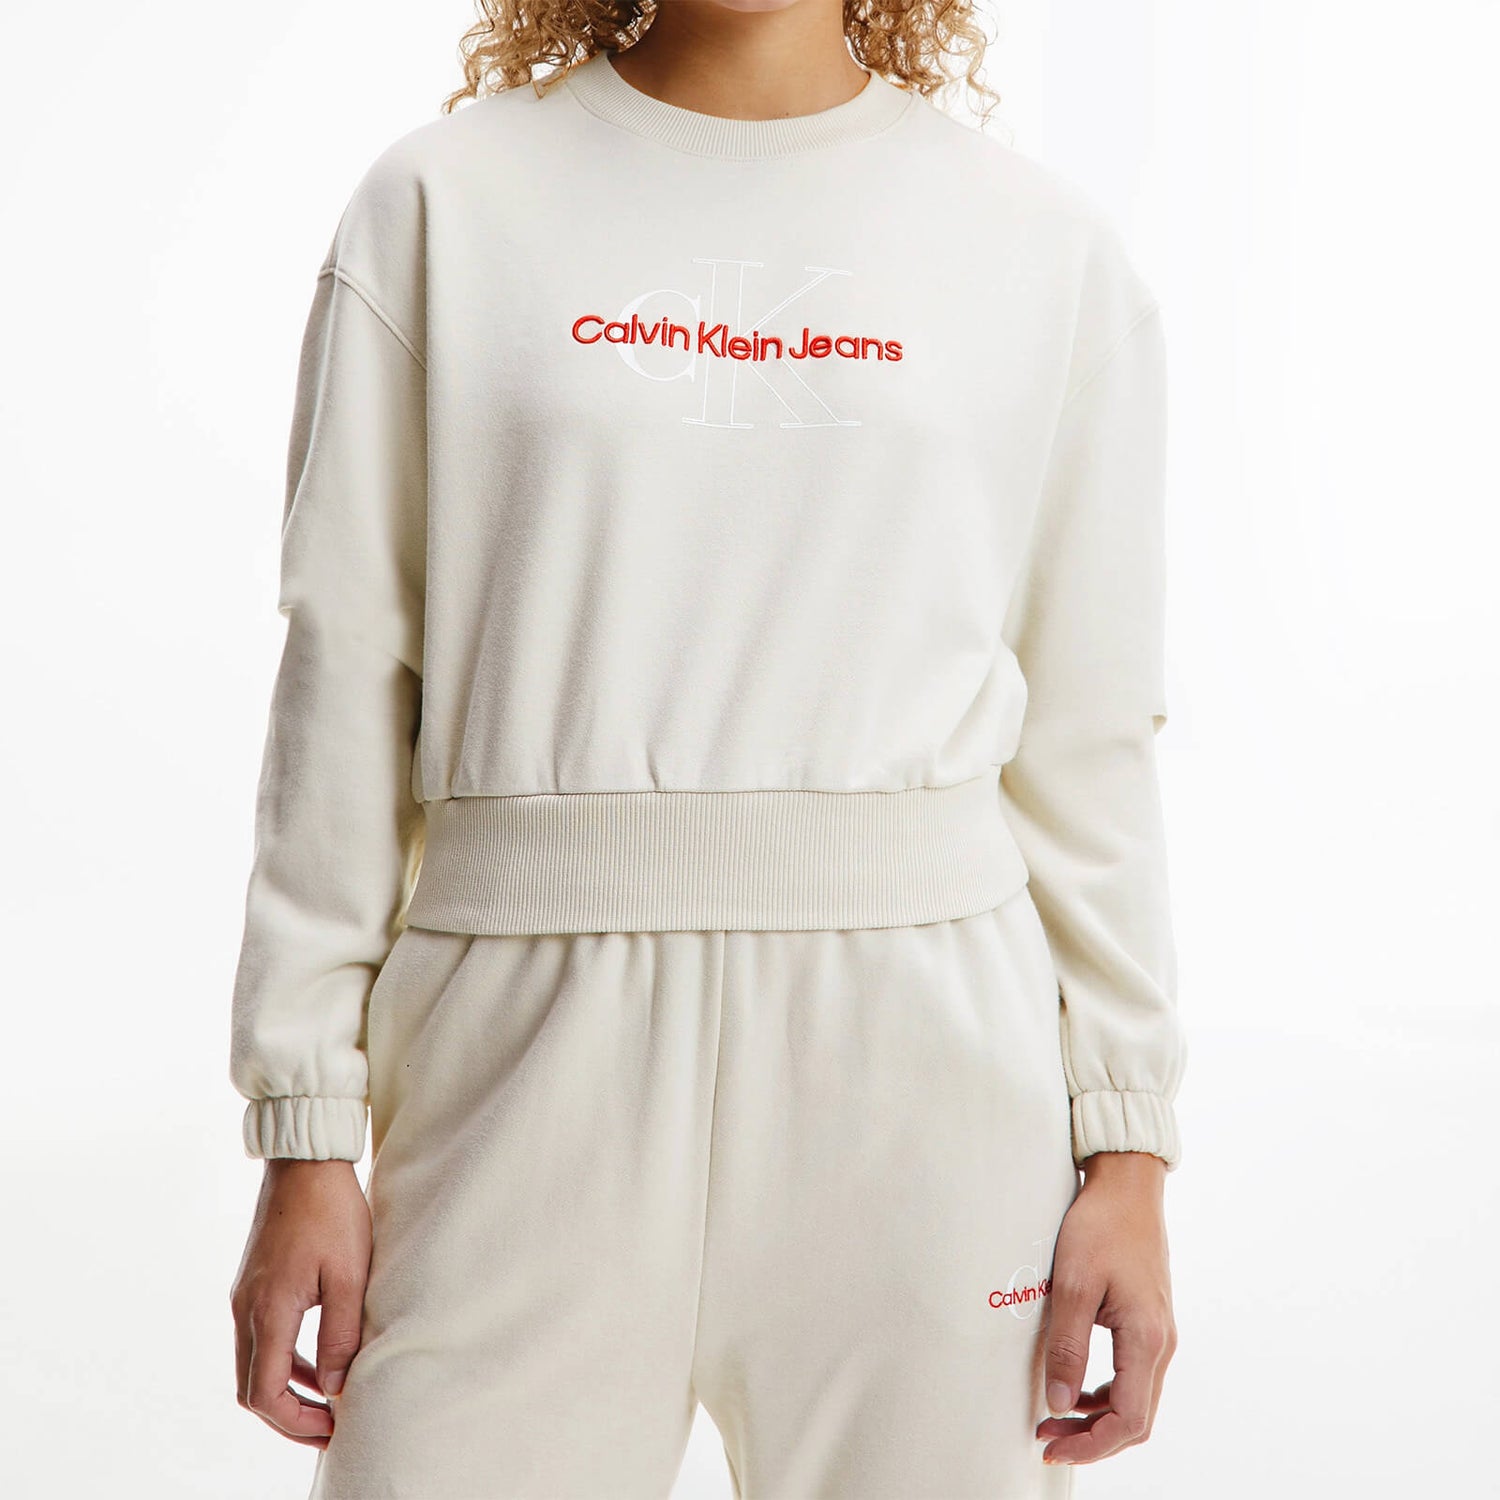 Calvin Klein Jeans Women's Two Tone Monogram Crop Crew Neck Sweatshirt - Eggshell - XL